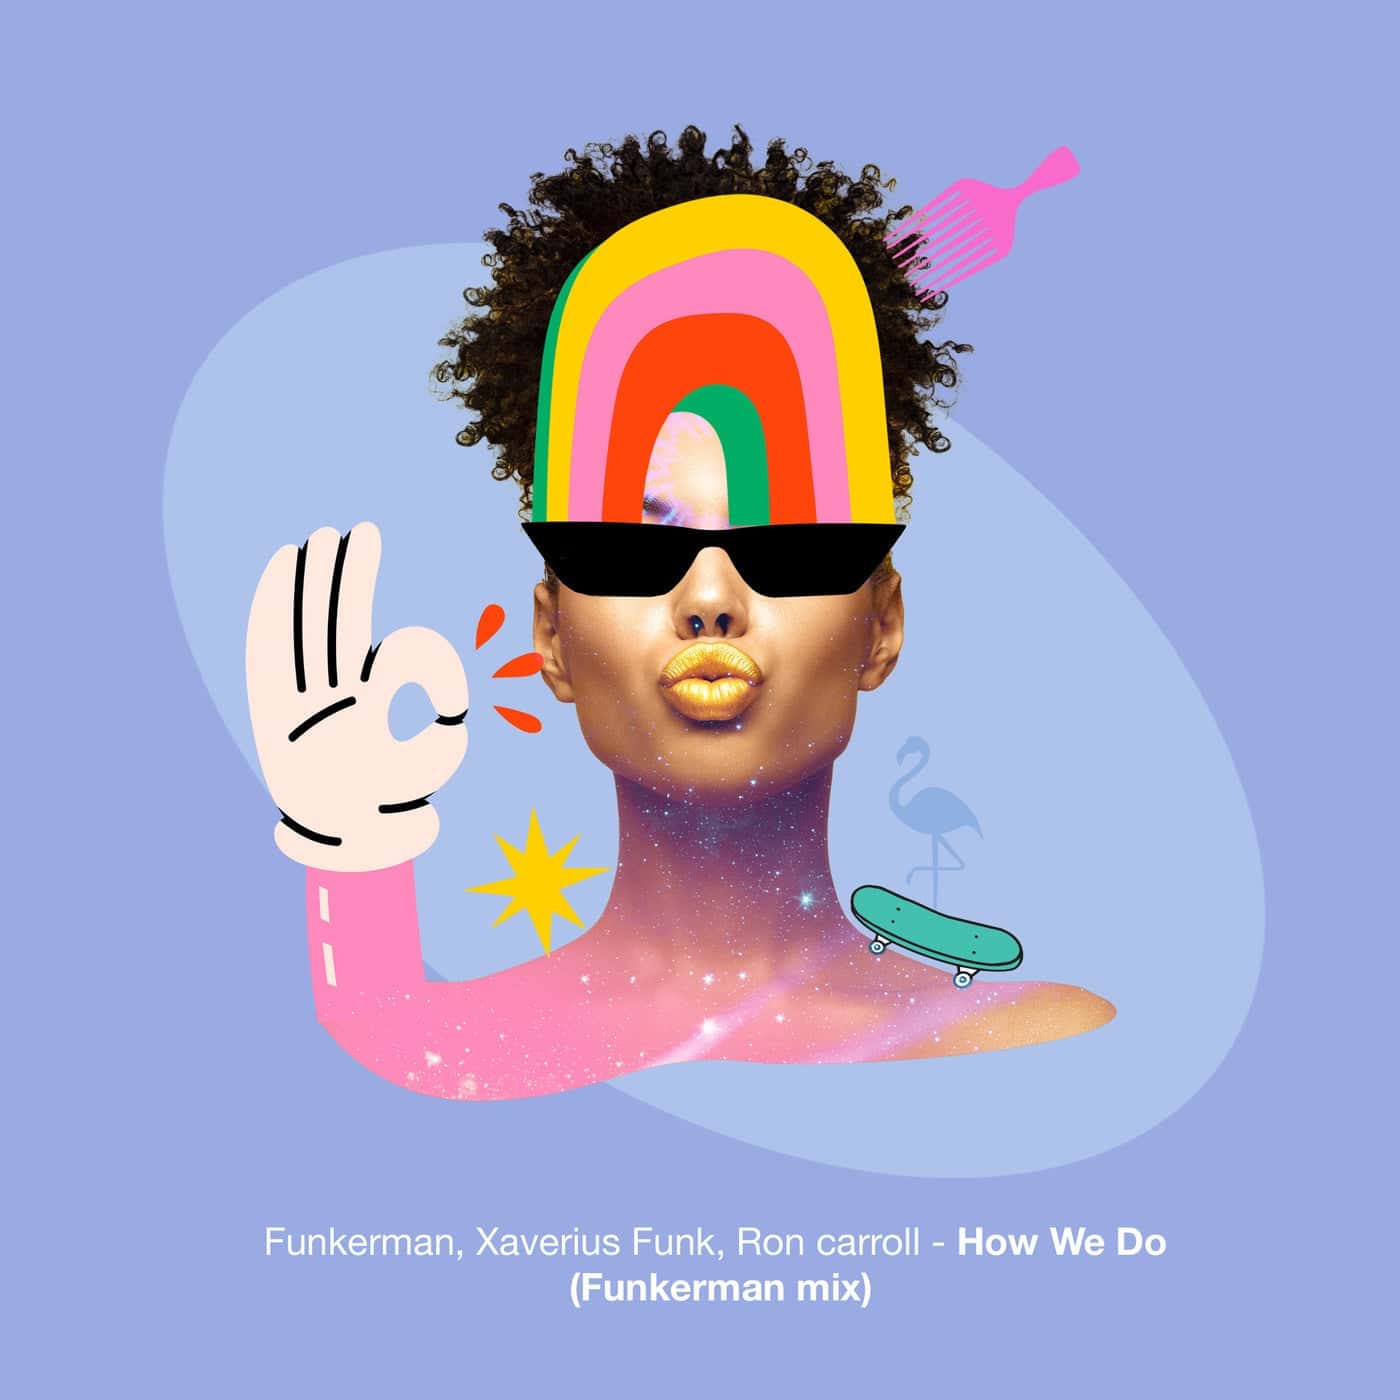 image cover: Funkerman, Ron Carroll, Xaverius Funk - How We Do Remix - Funkerman mix on Flamingo Recordings